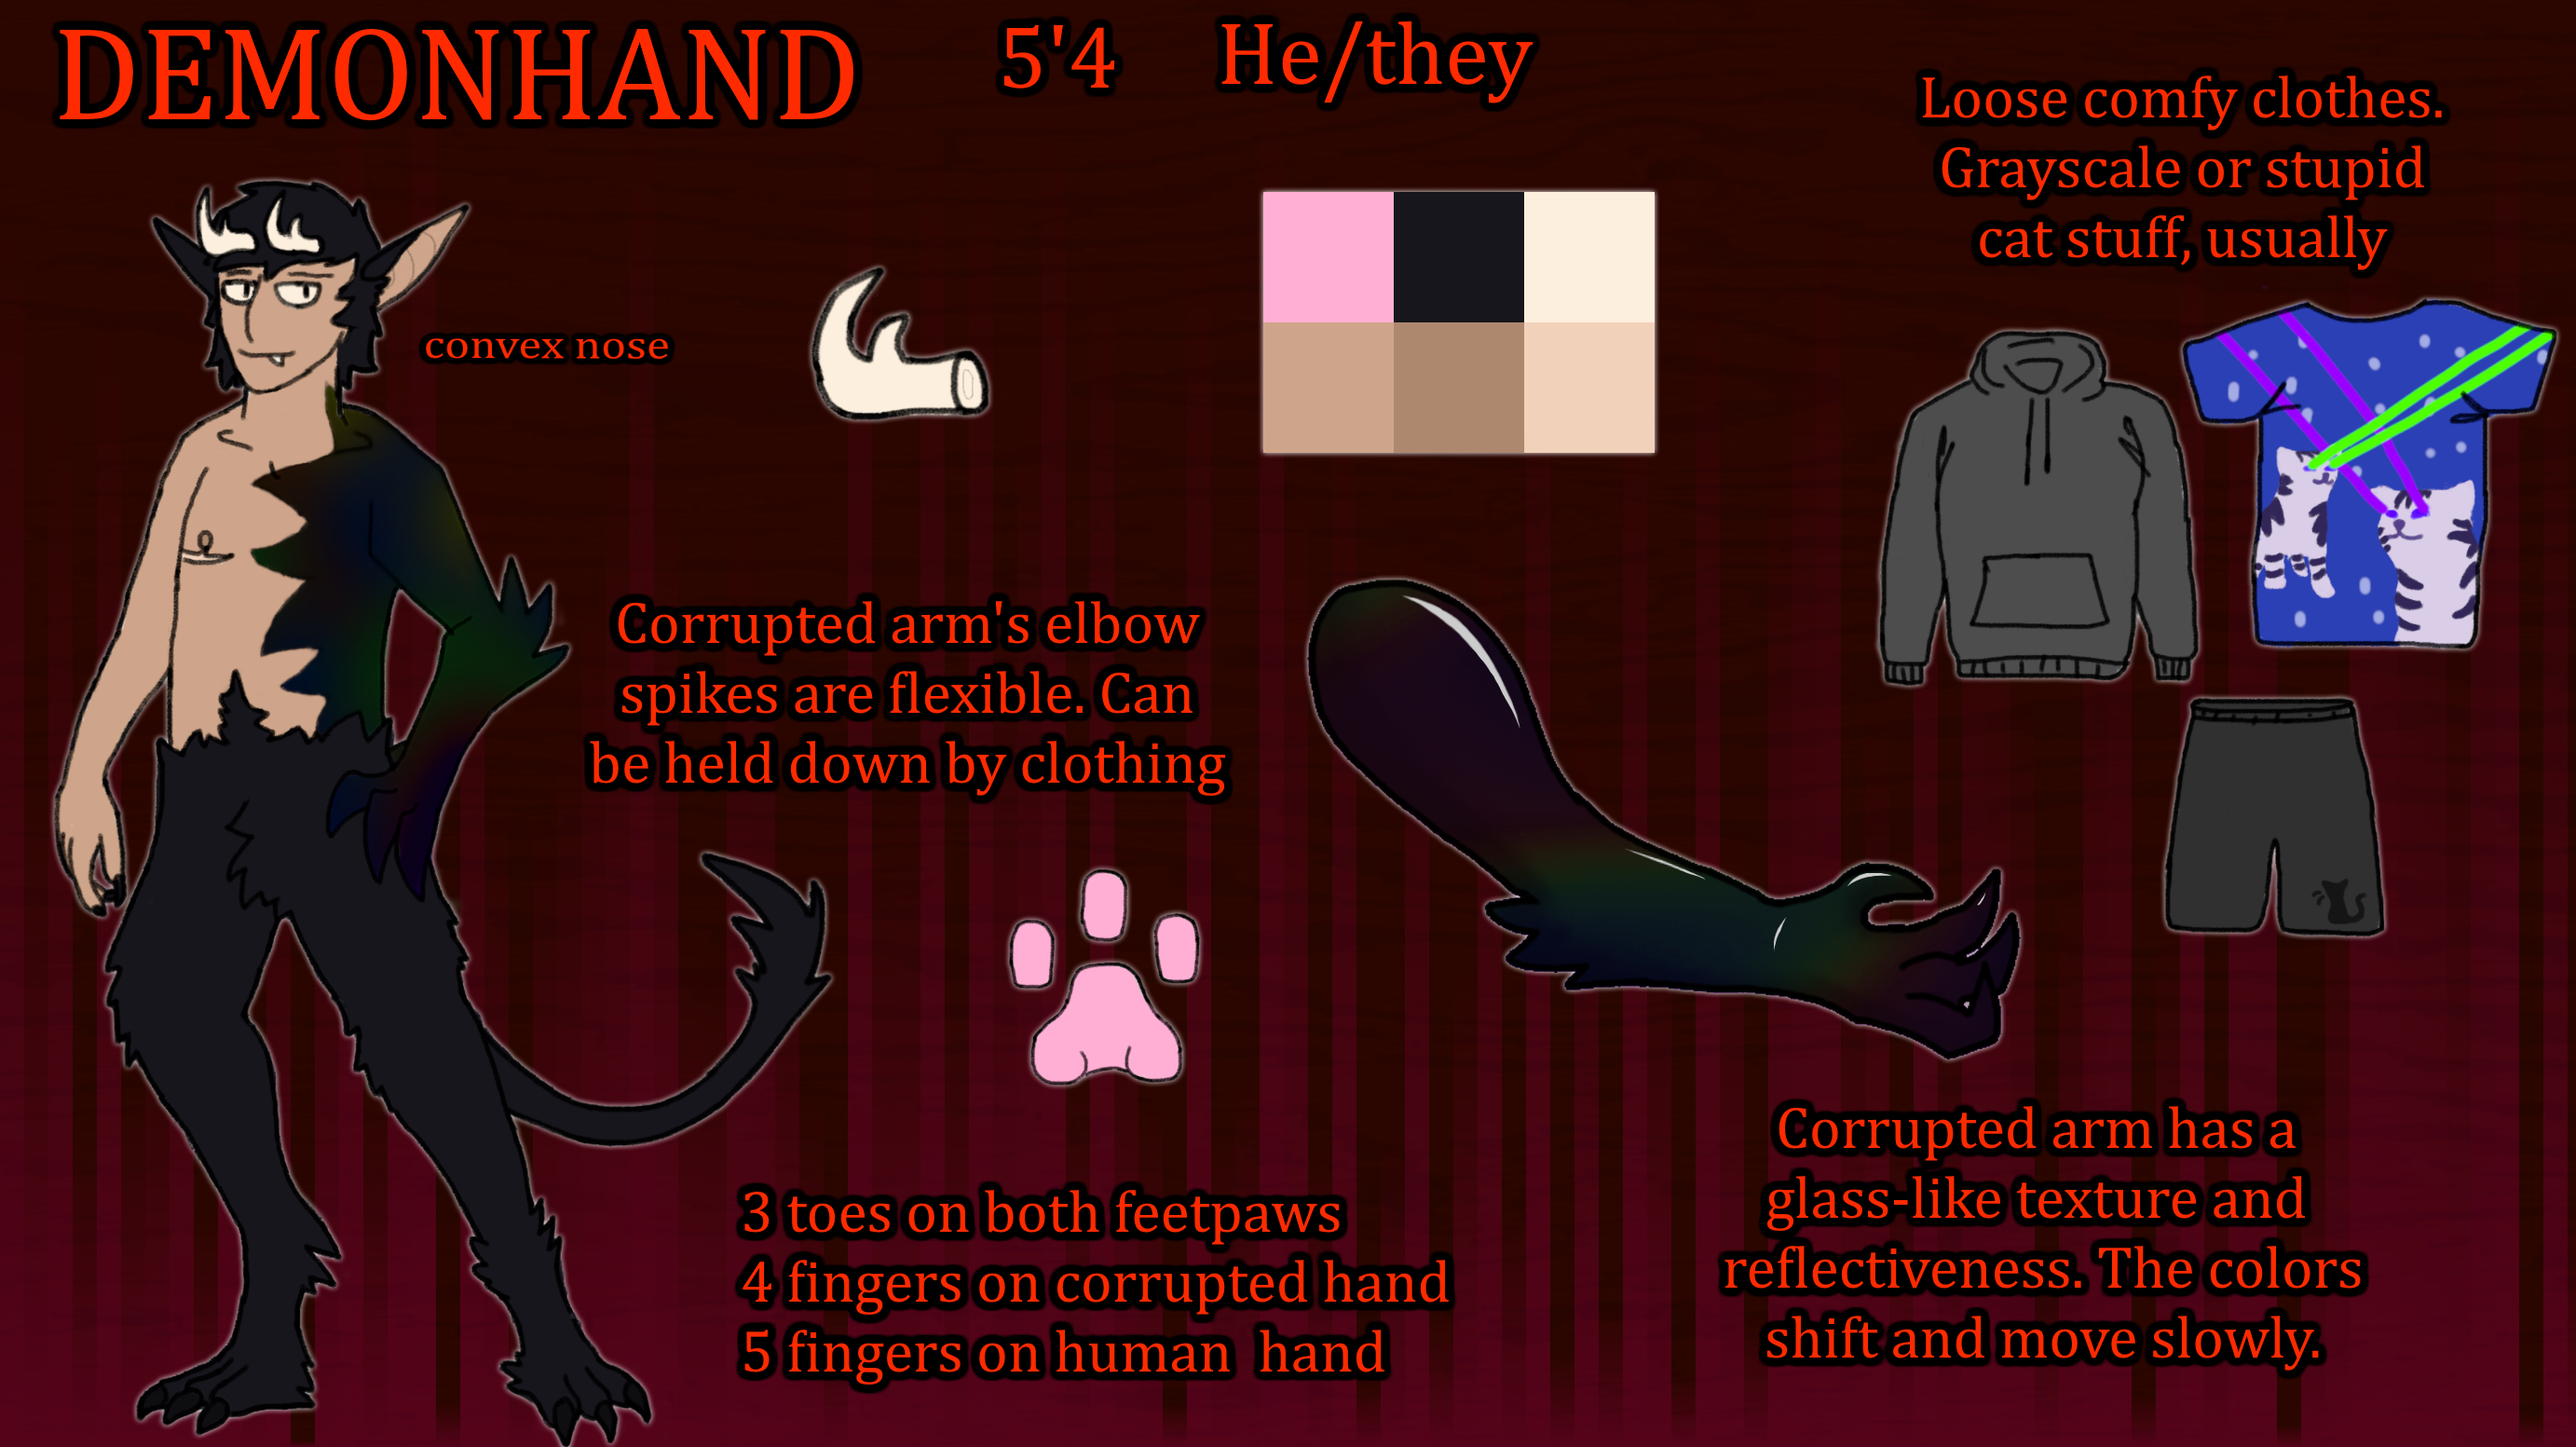 Demonhand's ref sheet